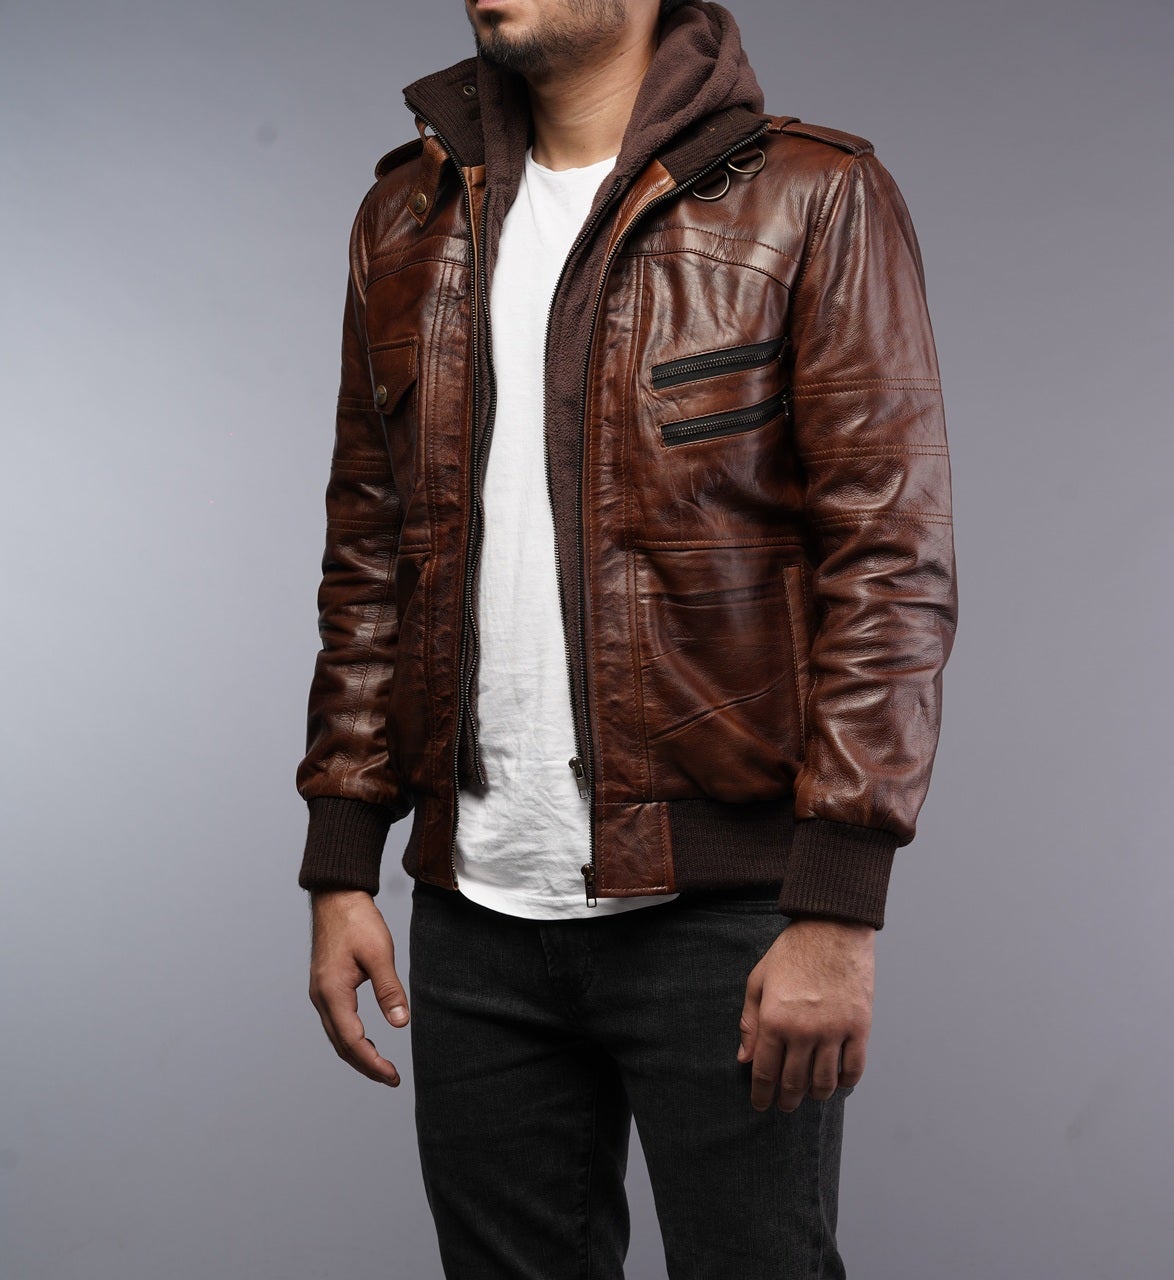 Genuine Leather Jackets For Men's Brown at 3999.00 INR in New Delhi | Fmj  Enterprises